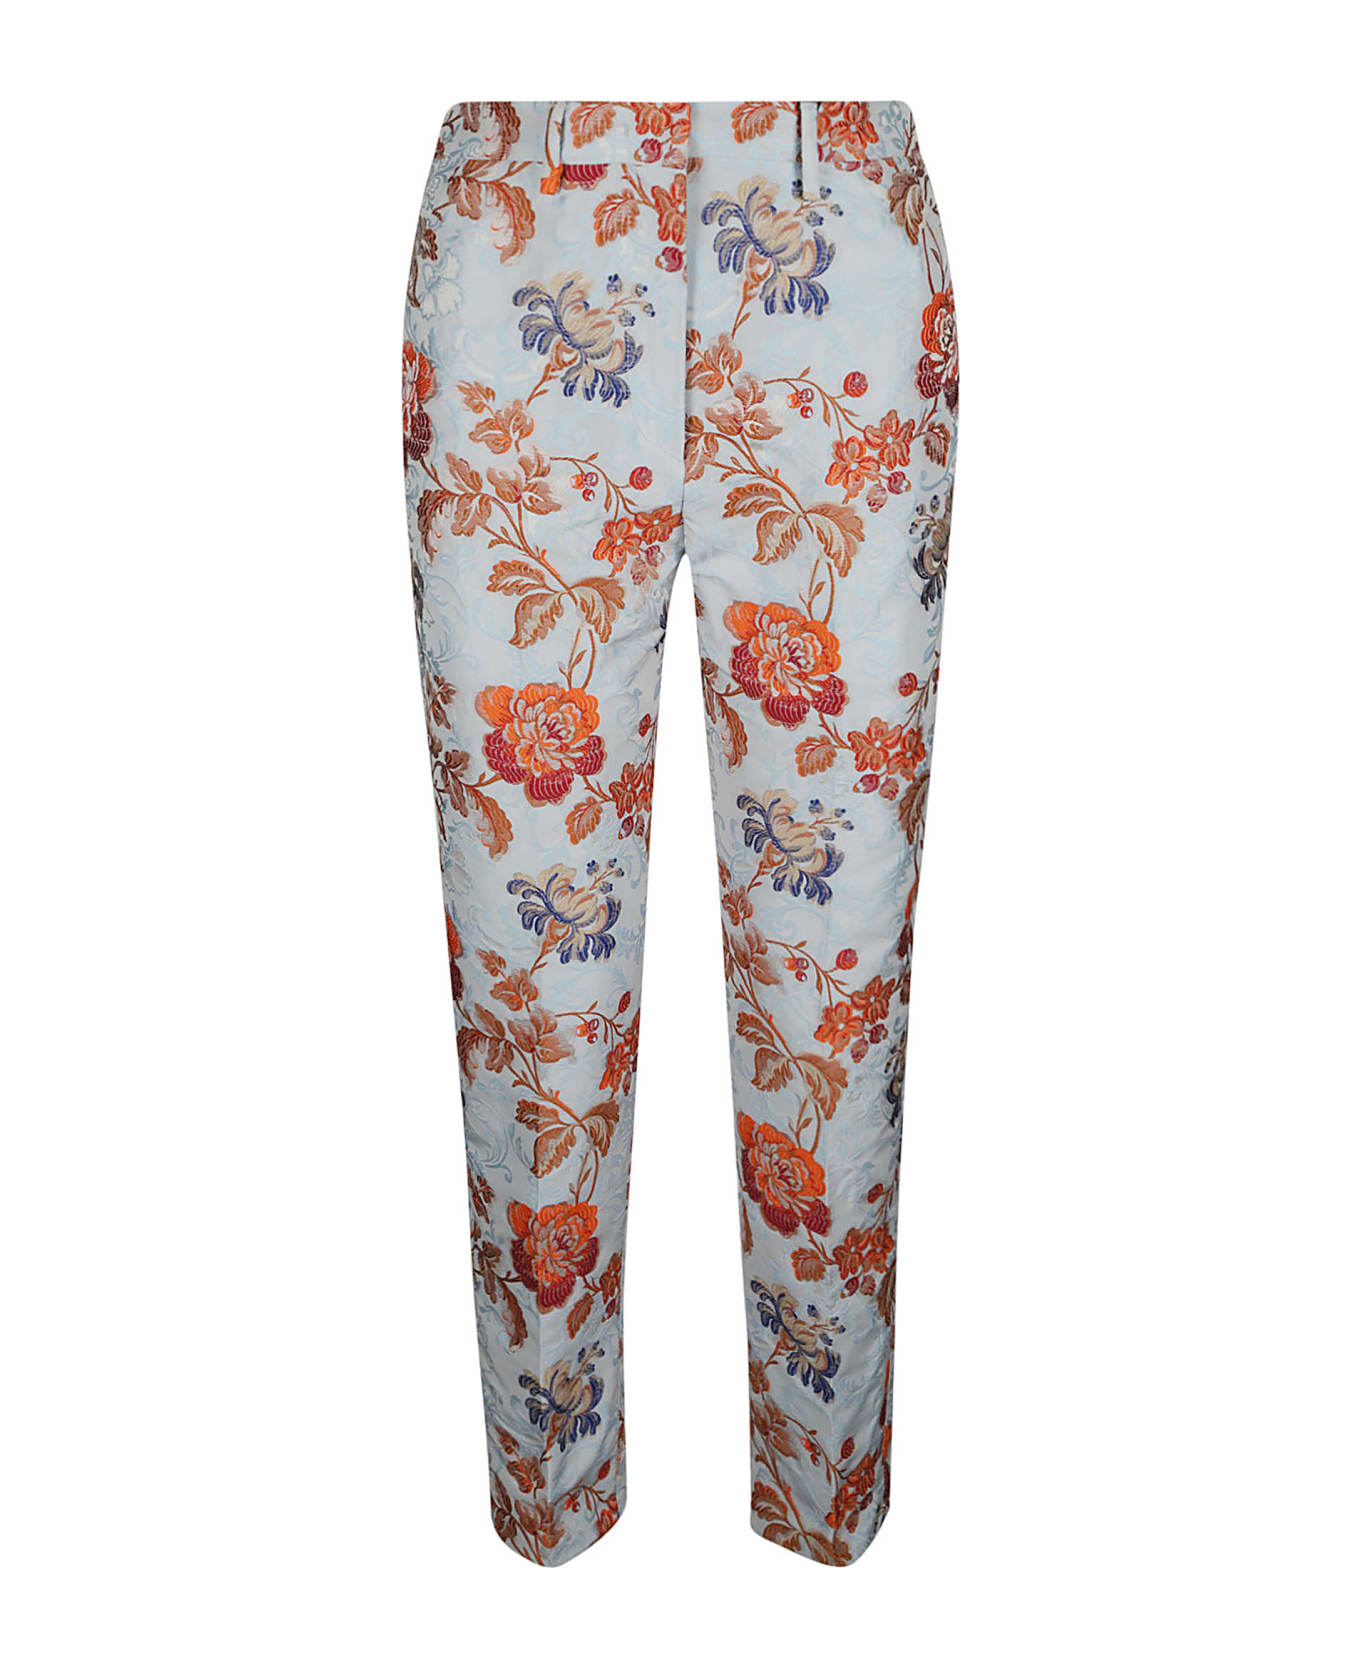 Etro Floral Print Trousers - Azure/Orange